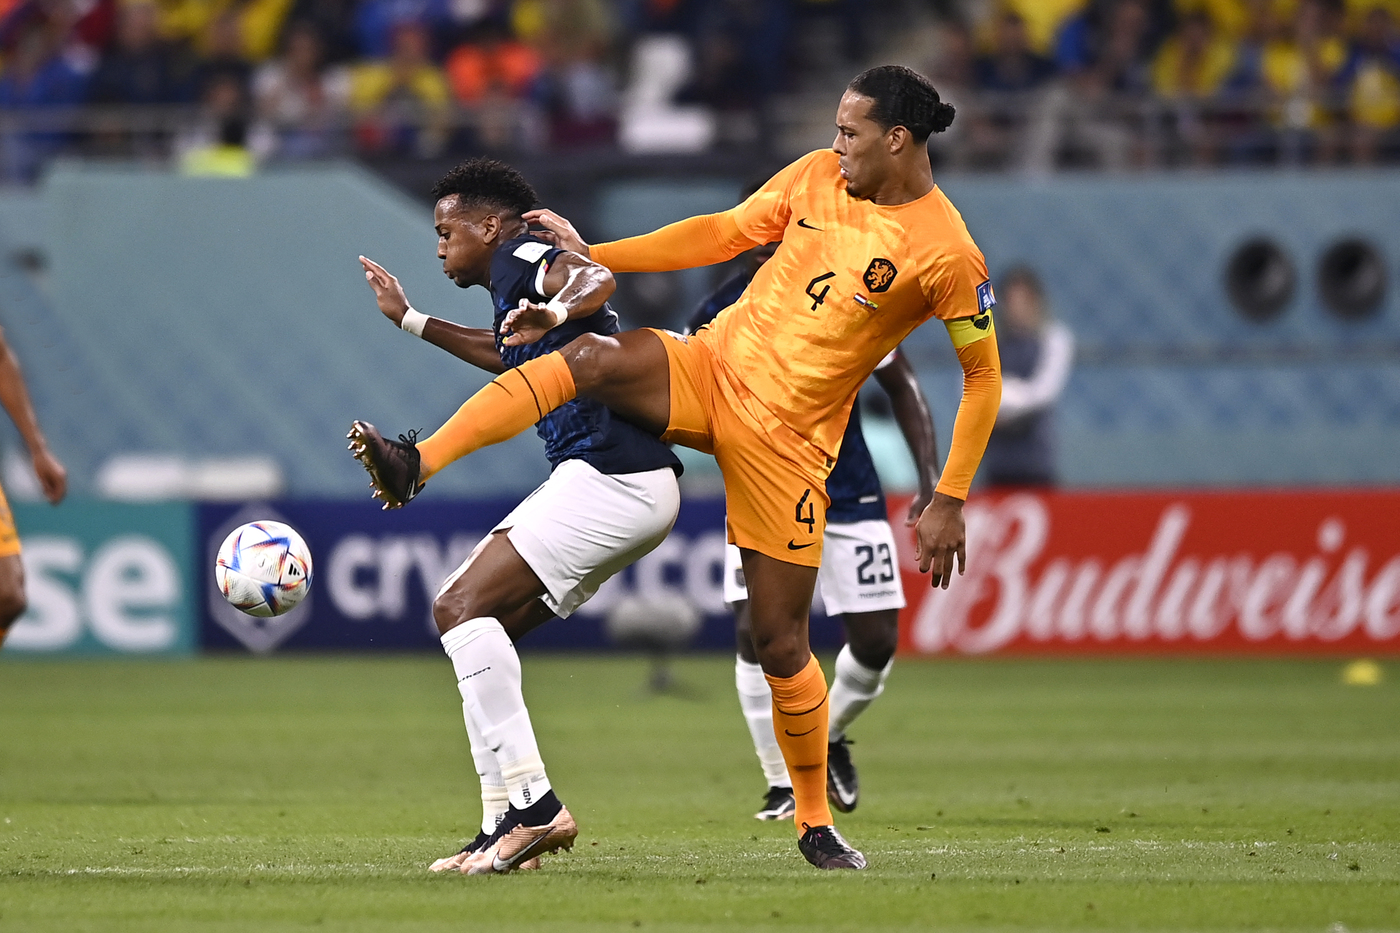 Olanda Ecuador in campo in Qatar 2022